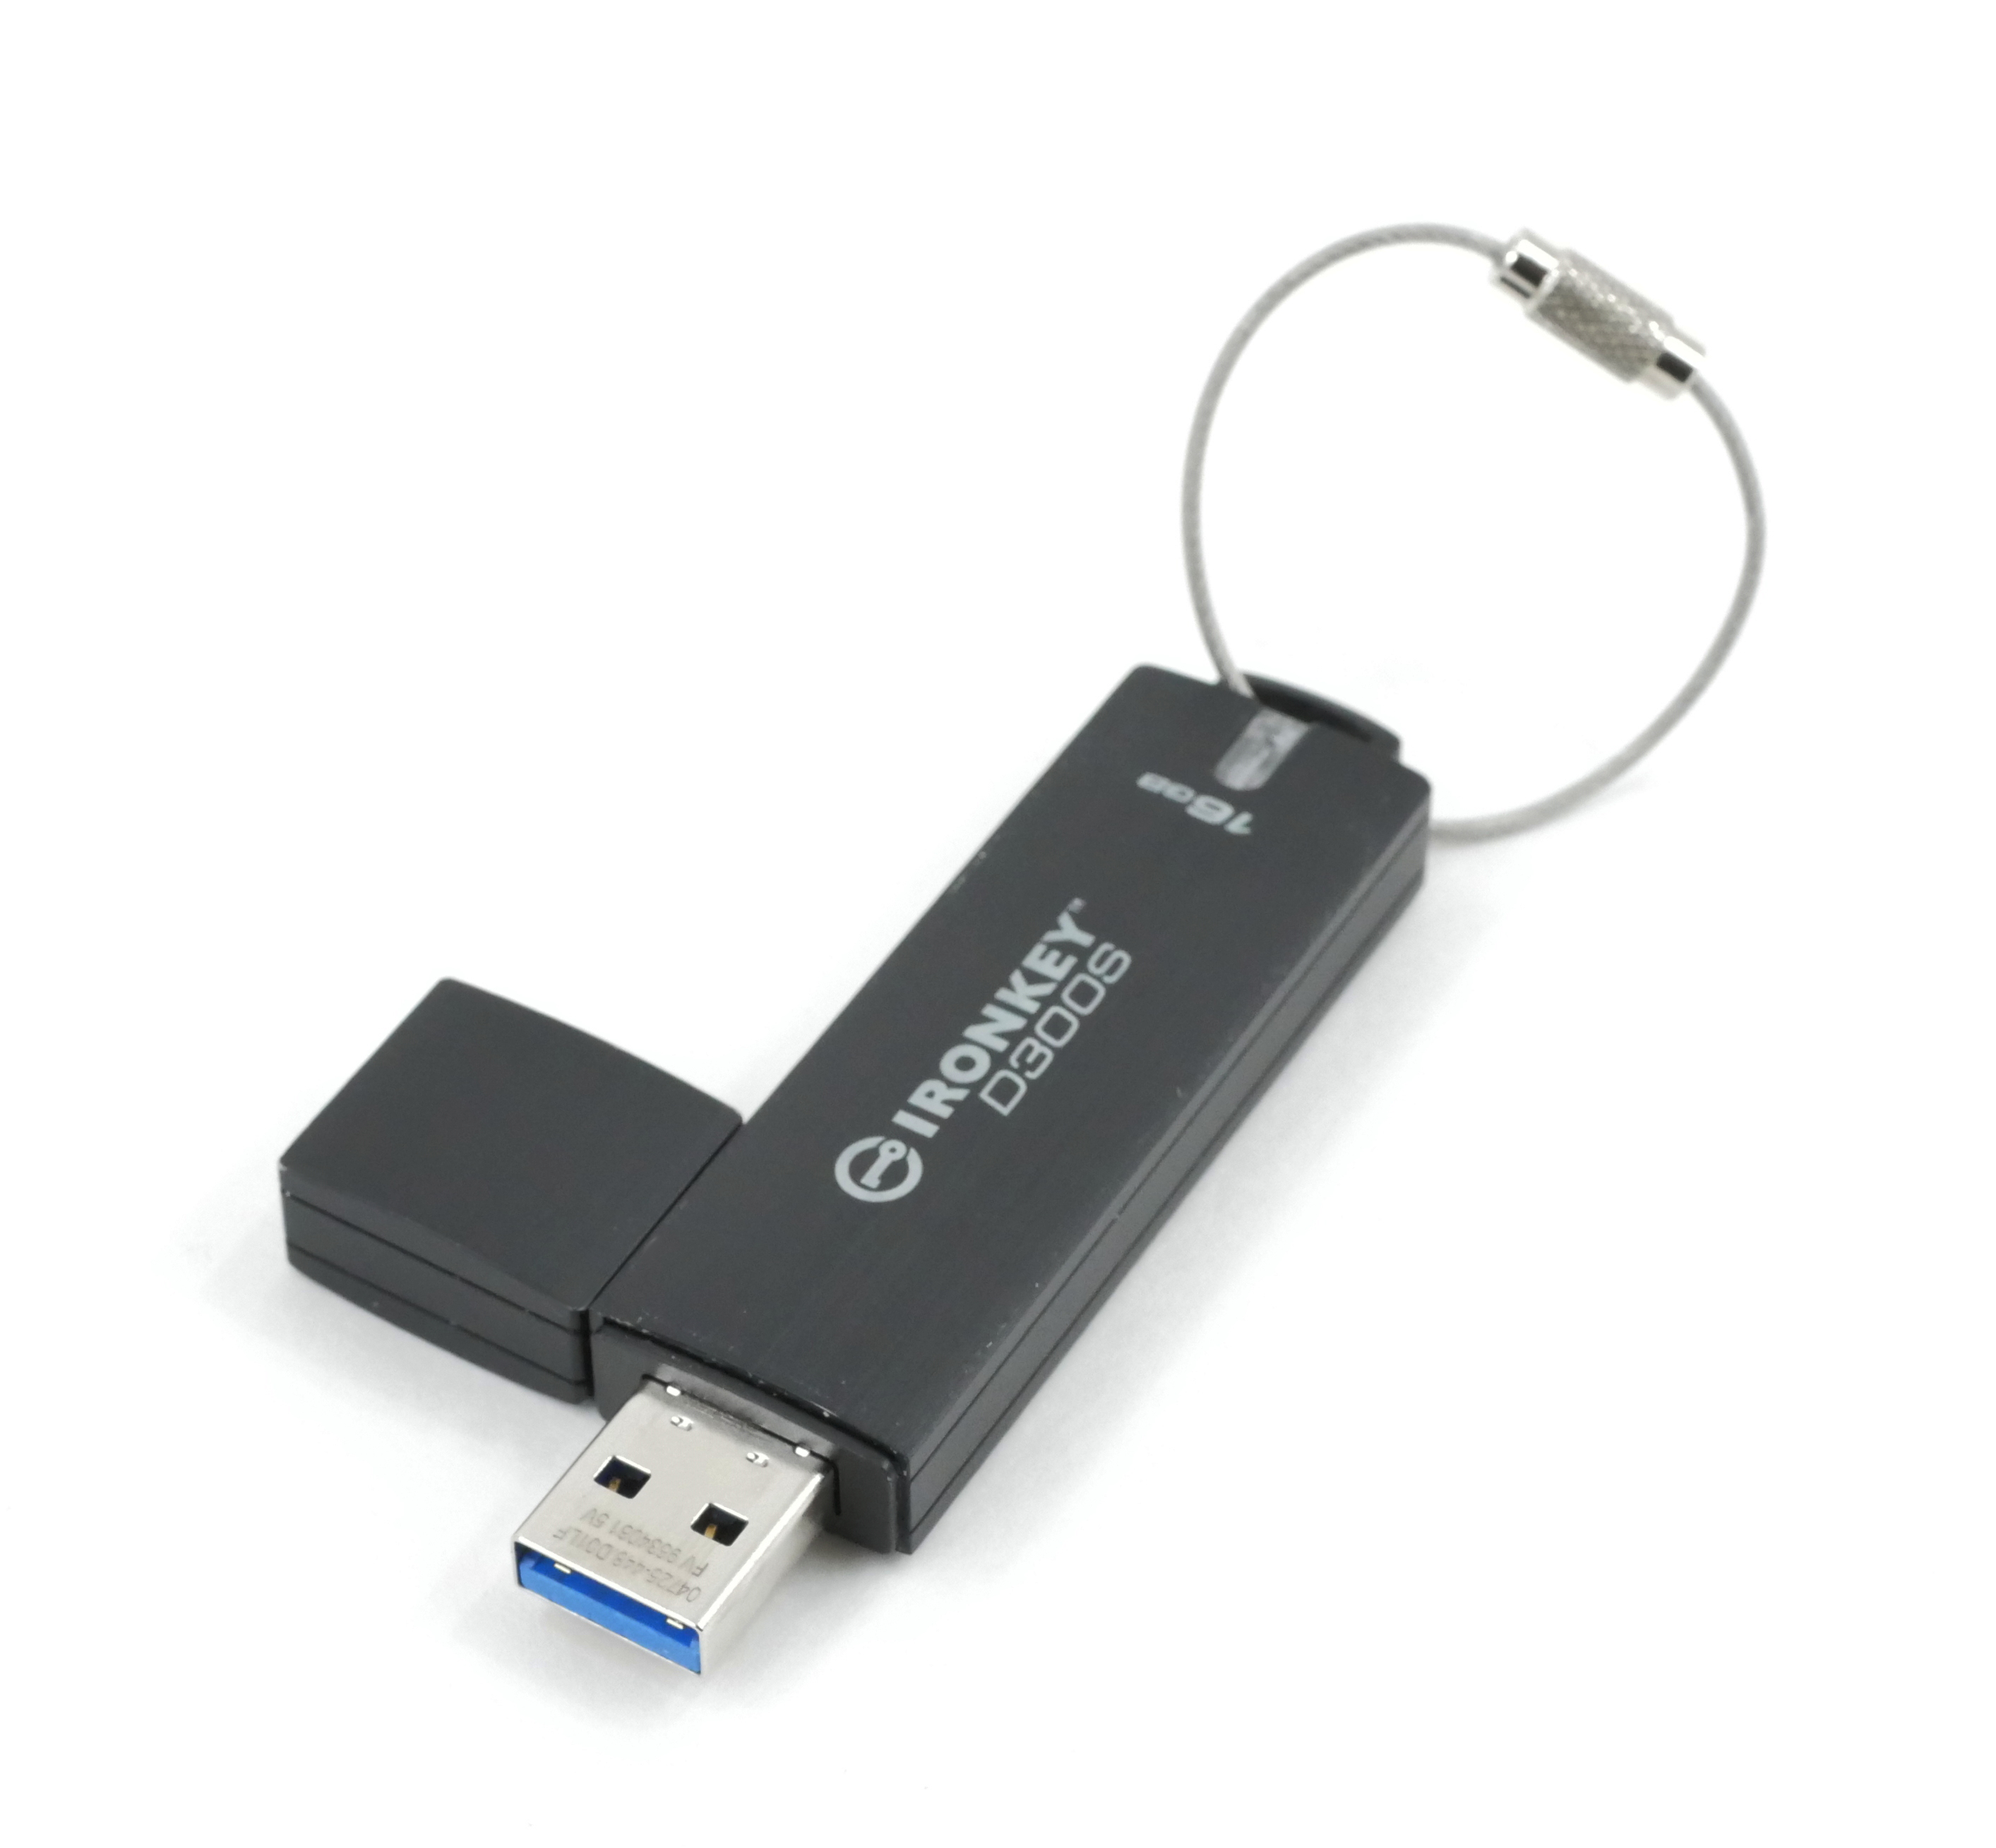 Disque dur externe Western Digital Elements 2TO USB 3.0 - PREMICE COMPUTER